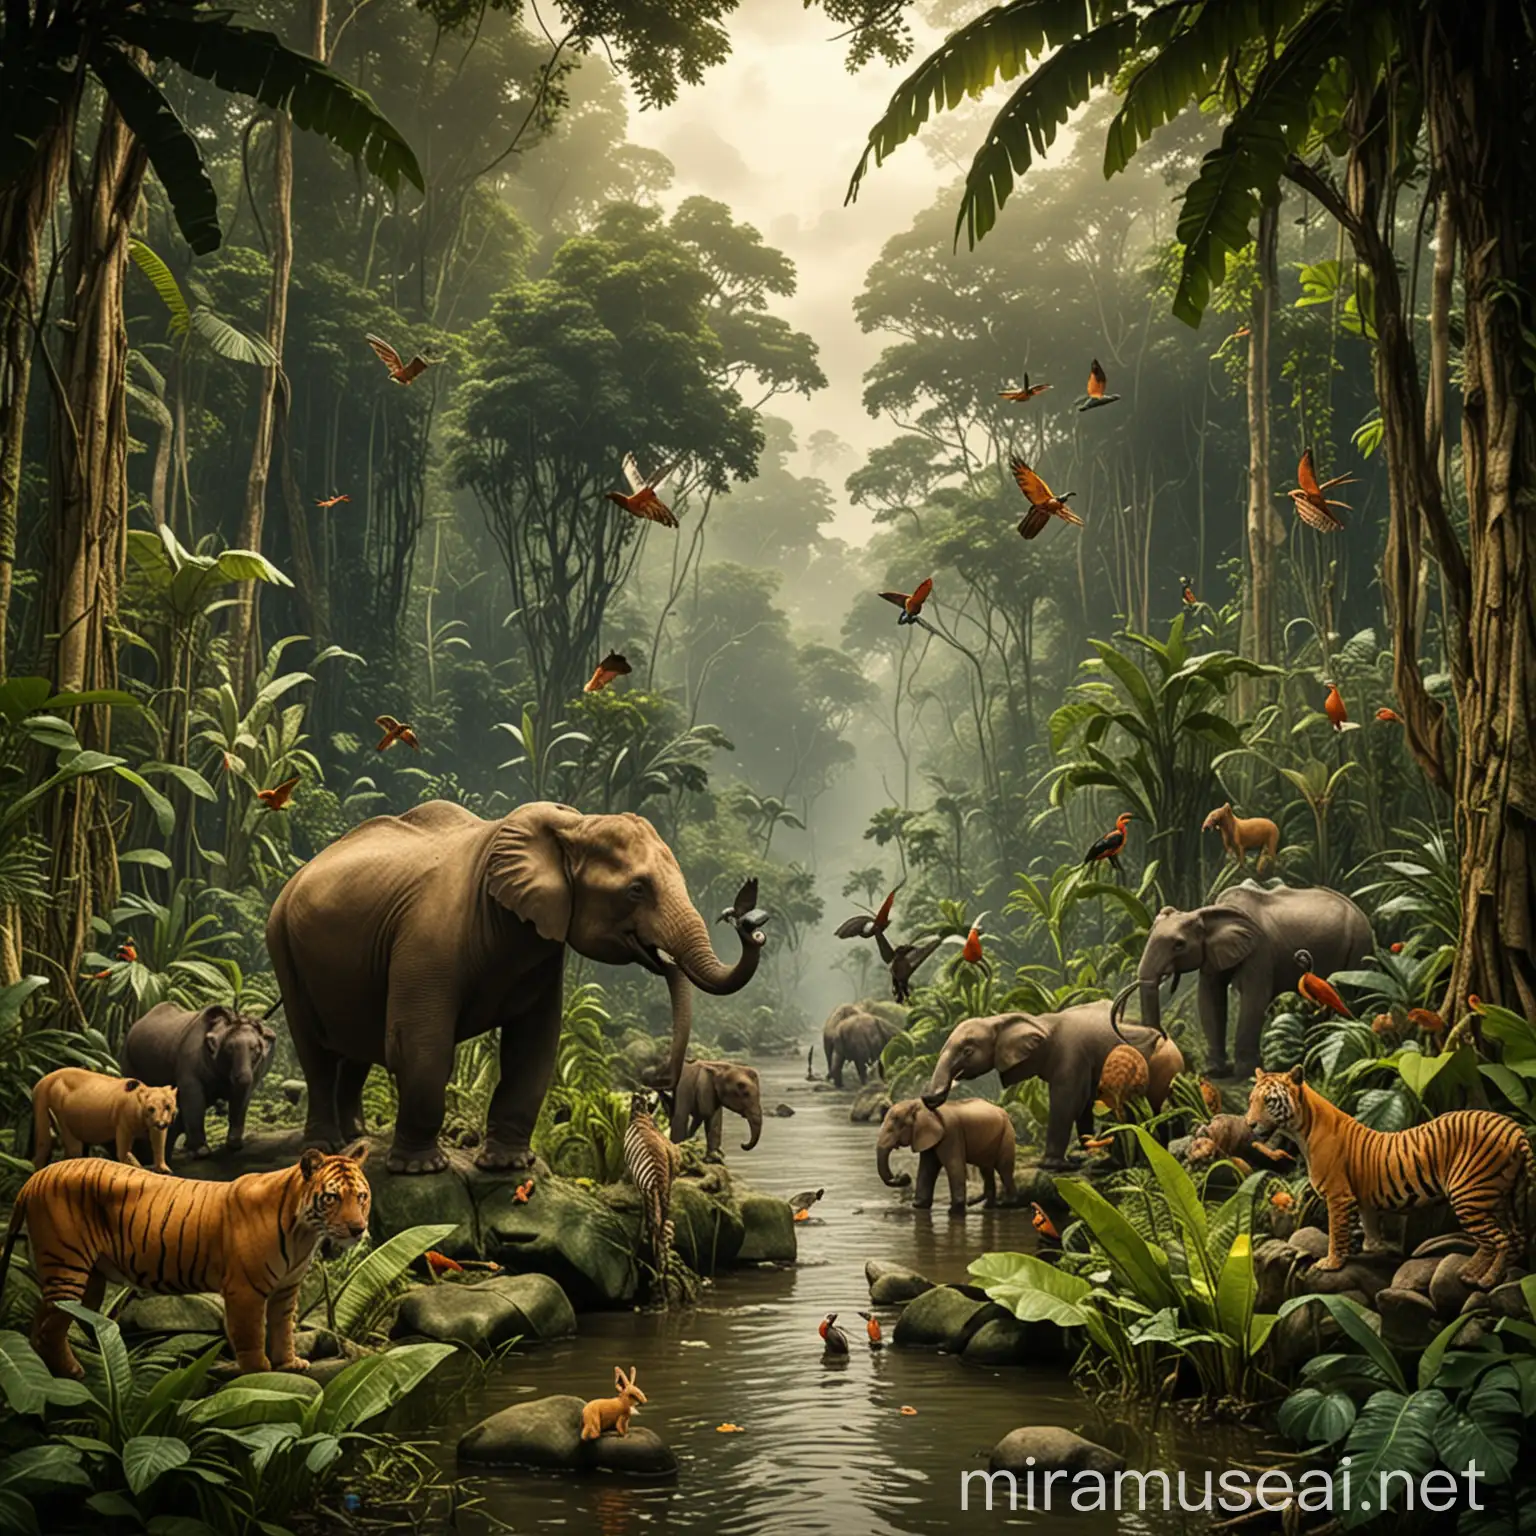 Vibrant Amazon Jungle Scene with Diverse Wildlife